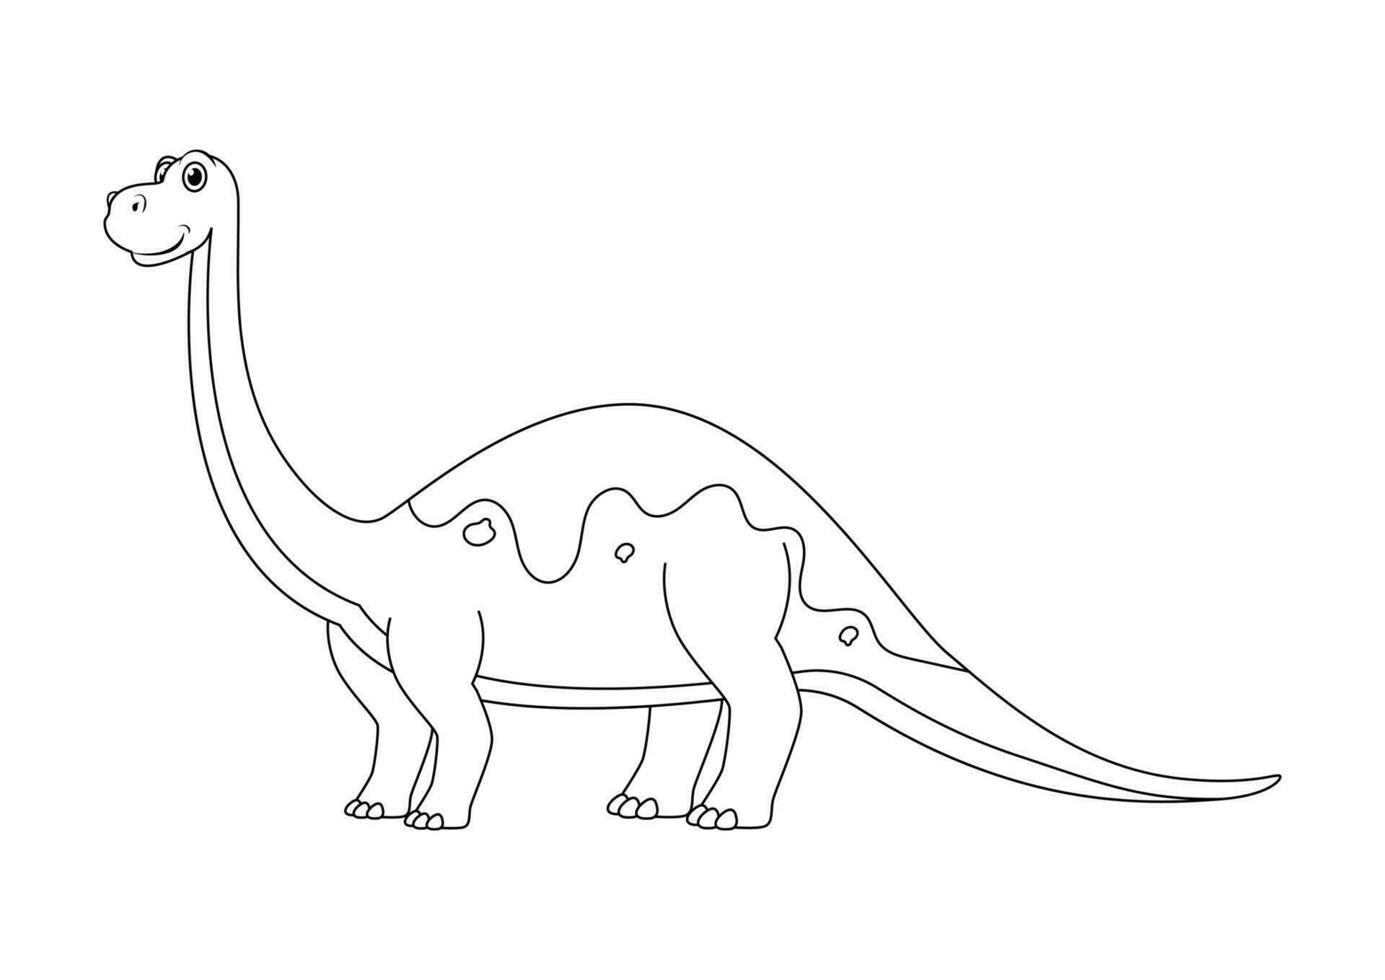 Black and White Brontosaurus Dinosaur Cartoon Character Vector. Coloring Page of a Brontosaurus Dinosaur vector